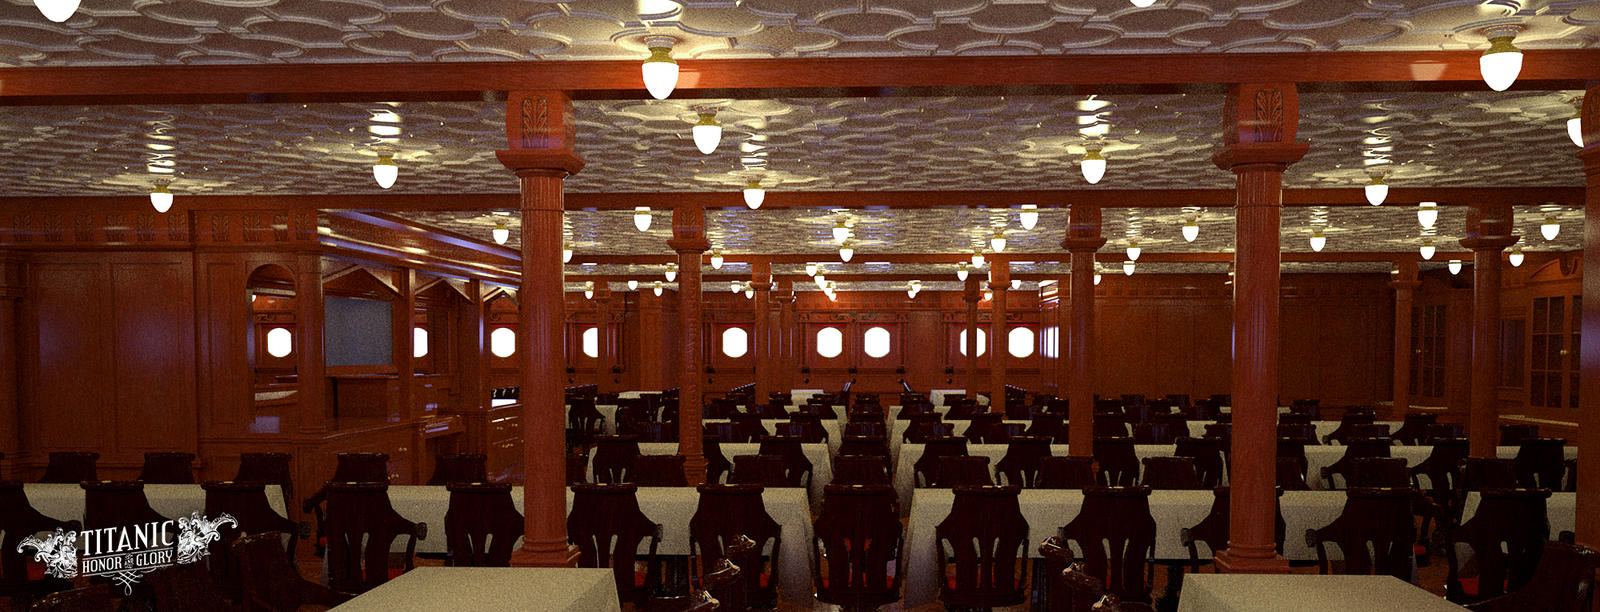 Titanic's Second Class Dining Saloon by TitanicHonorAndGlory on DeviantArt